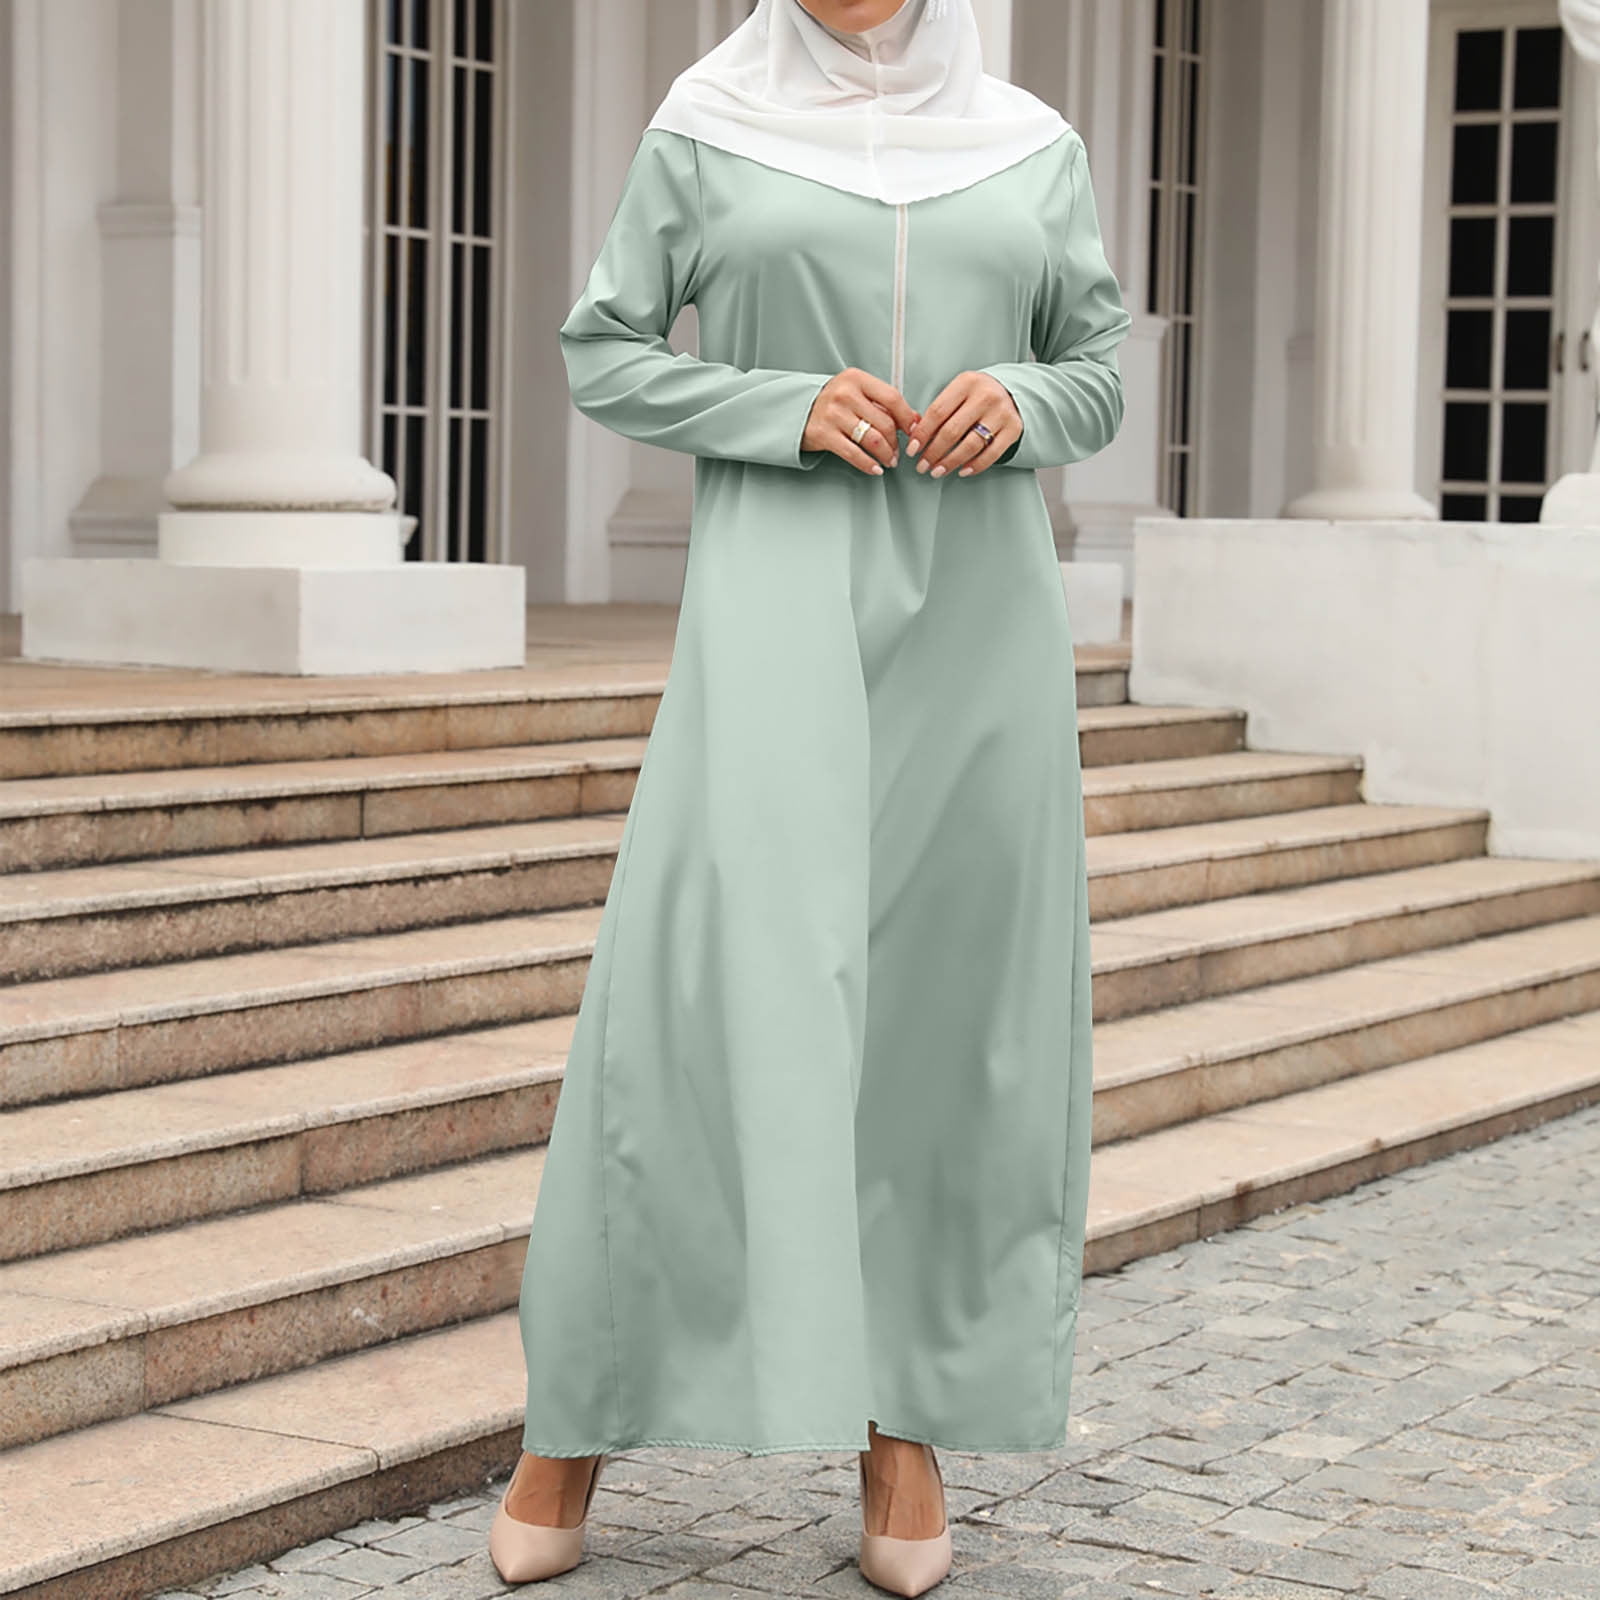 cllios Women's Muslim Maxi Dresses Summer Long Sleeves Prayer